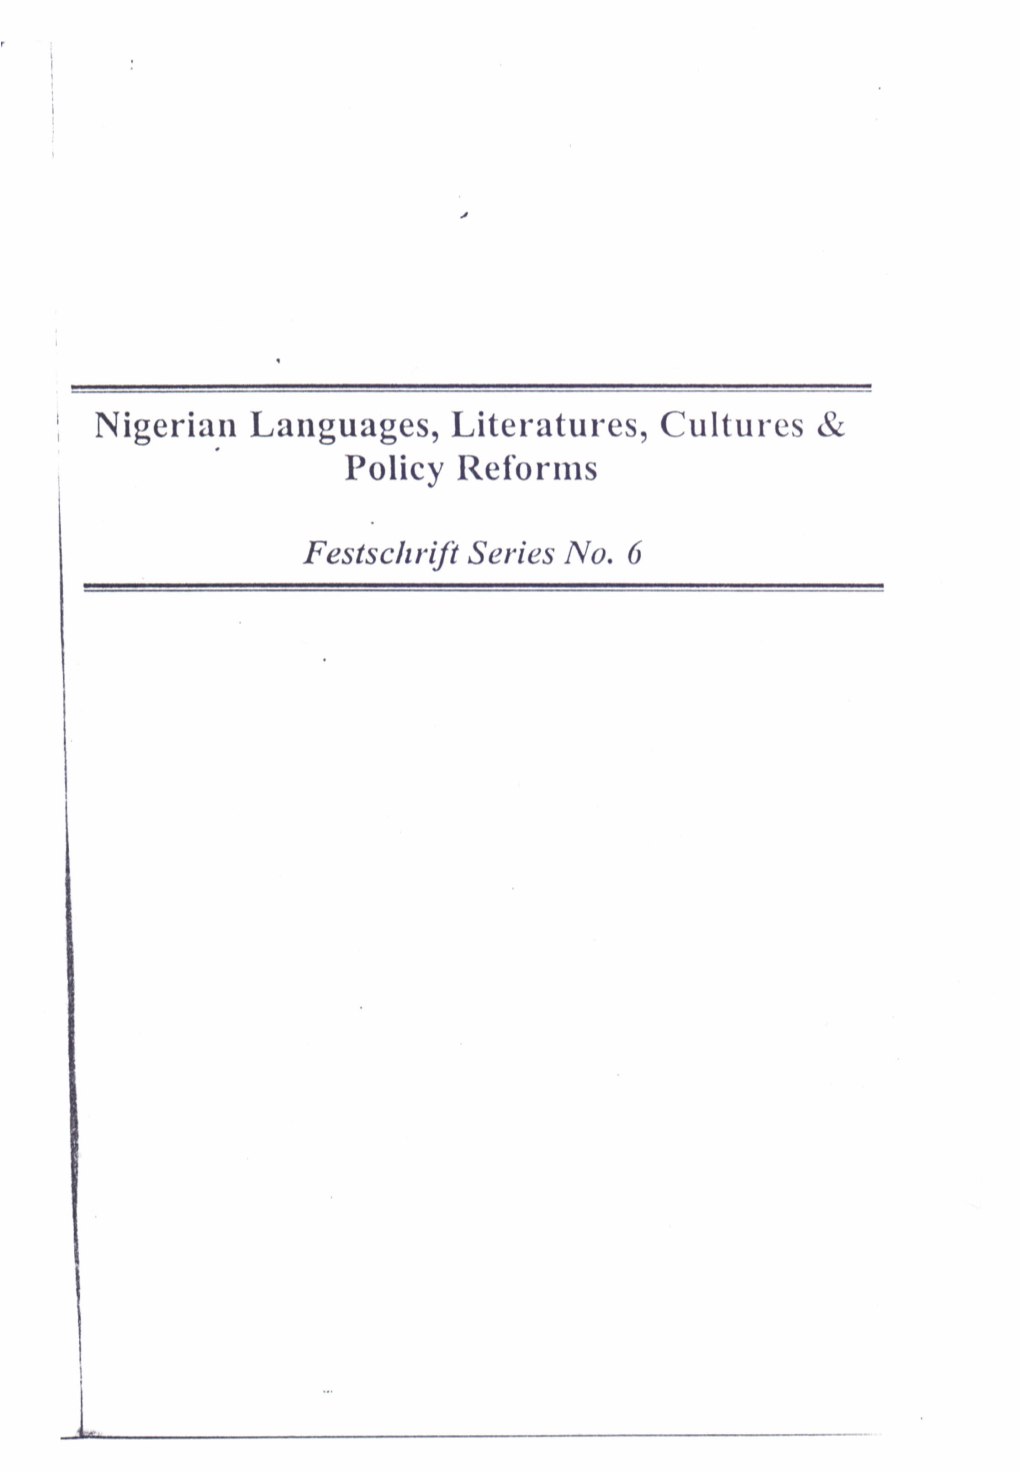 Nigerian Languages, Literatures, Cultures & Policy Reforms